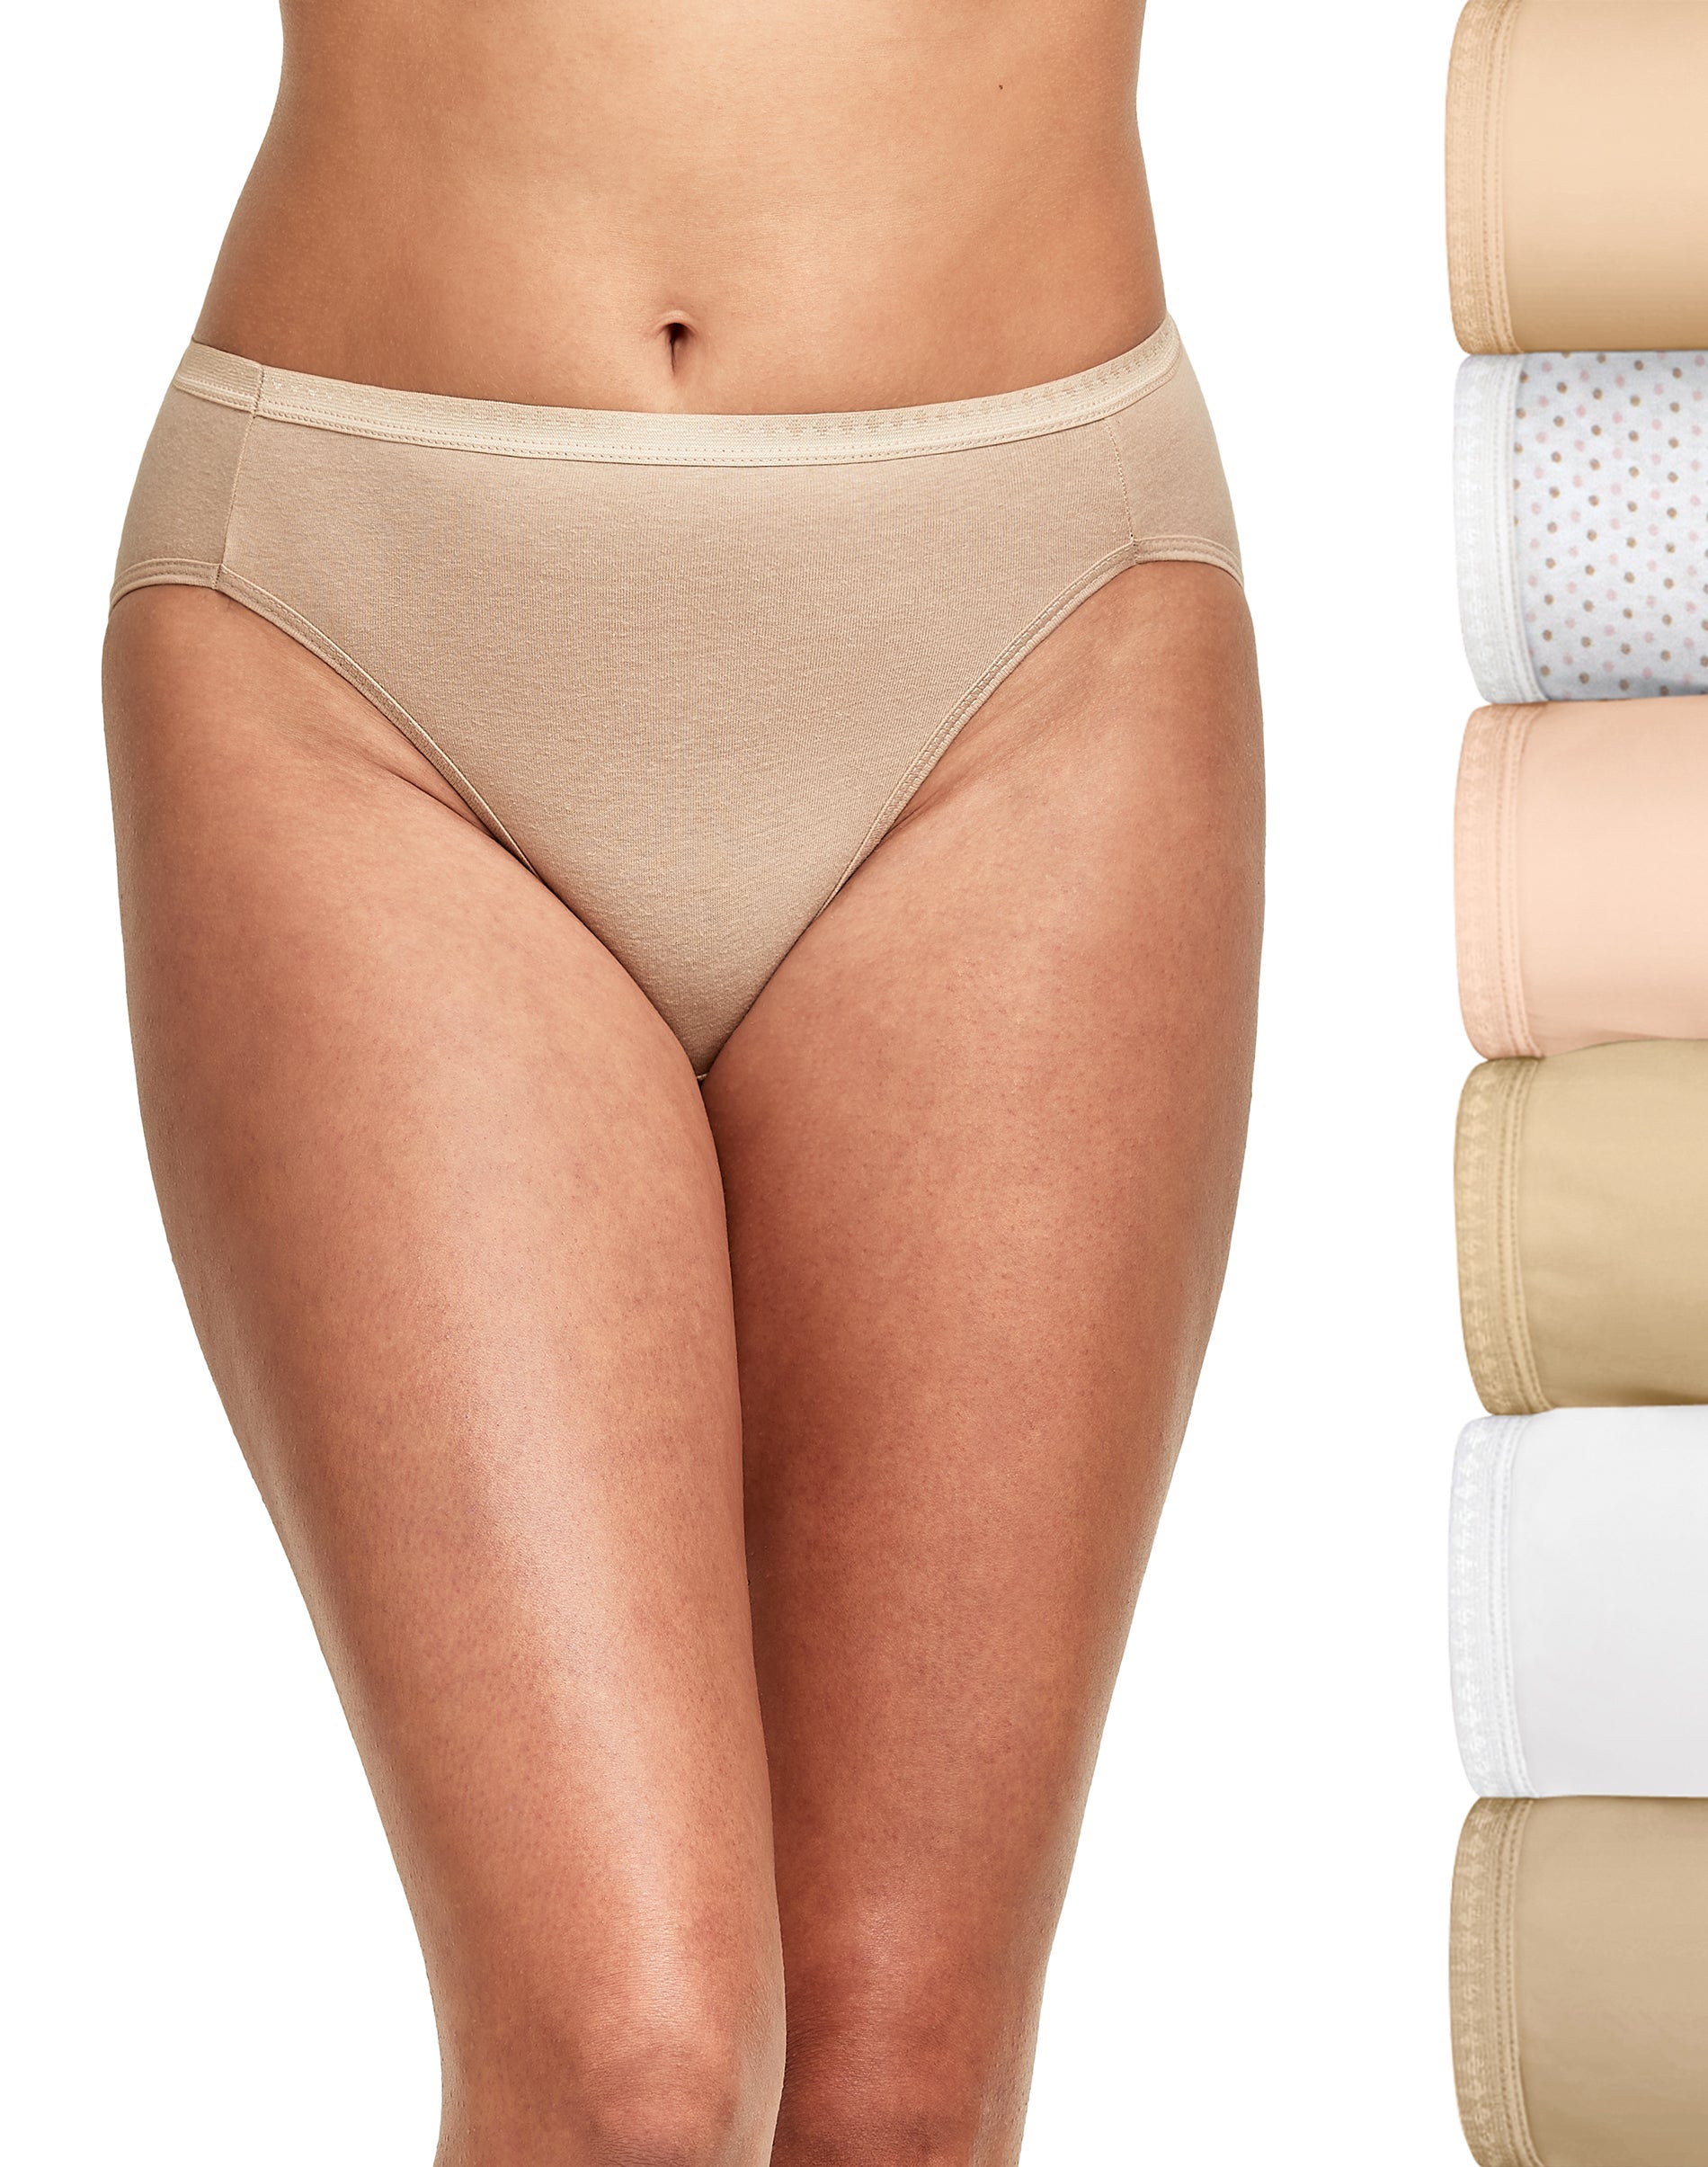 Hanes Women 3 Pack Hi-Cuts underwear